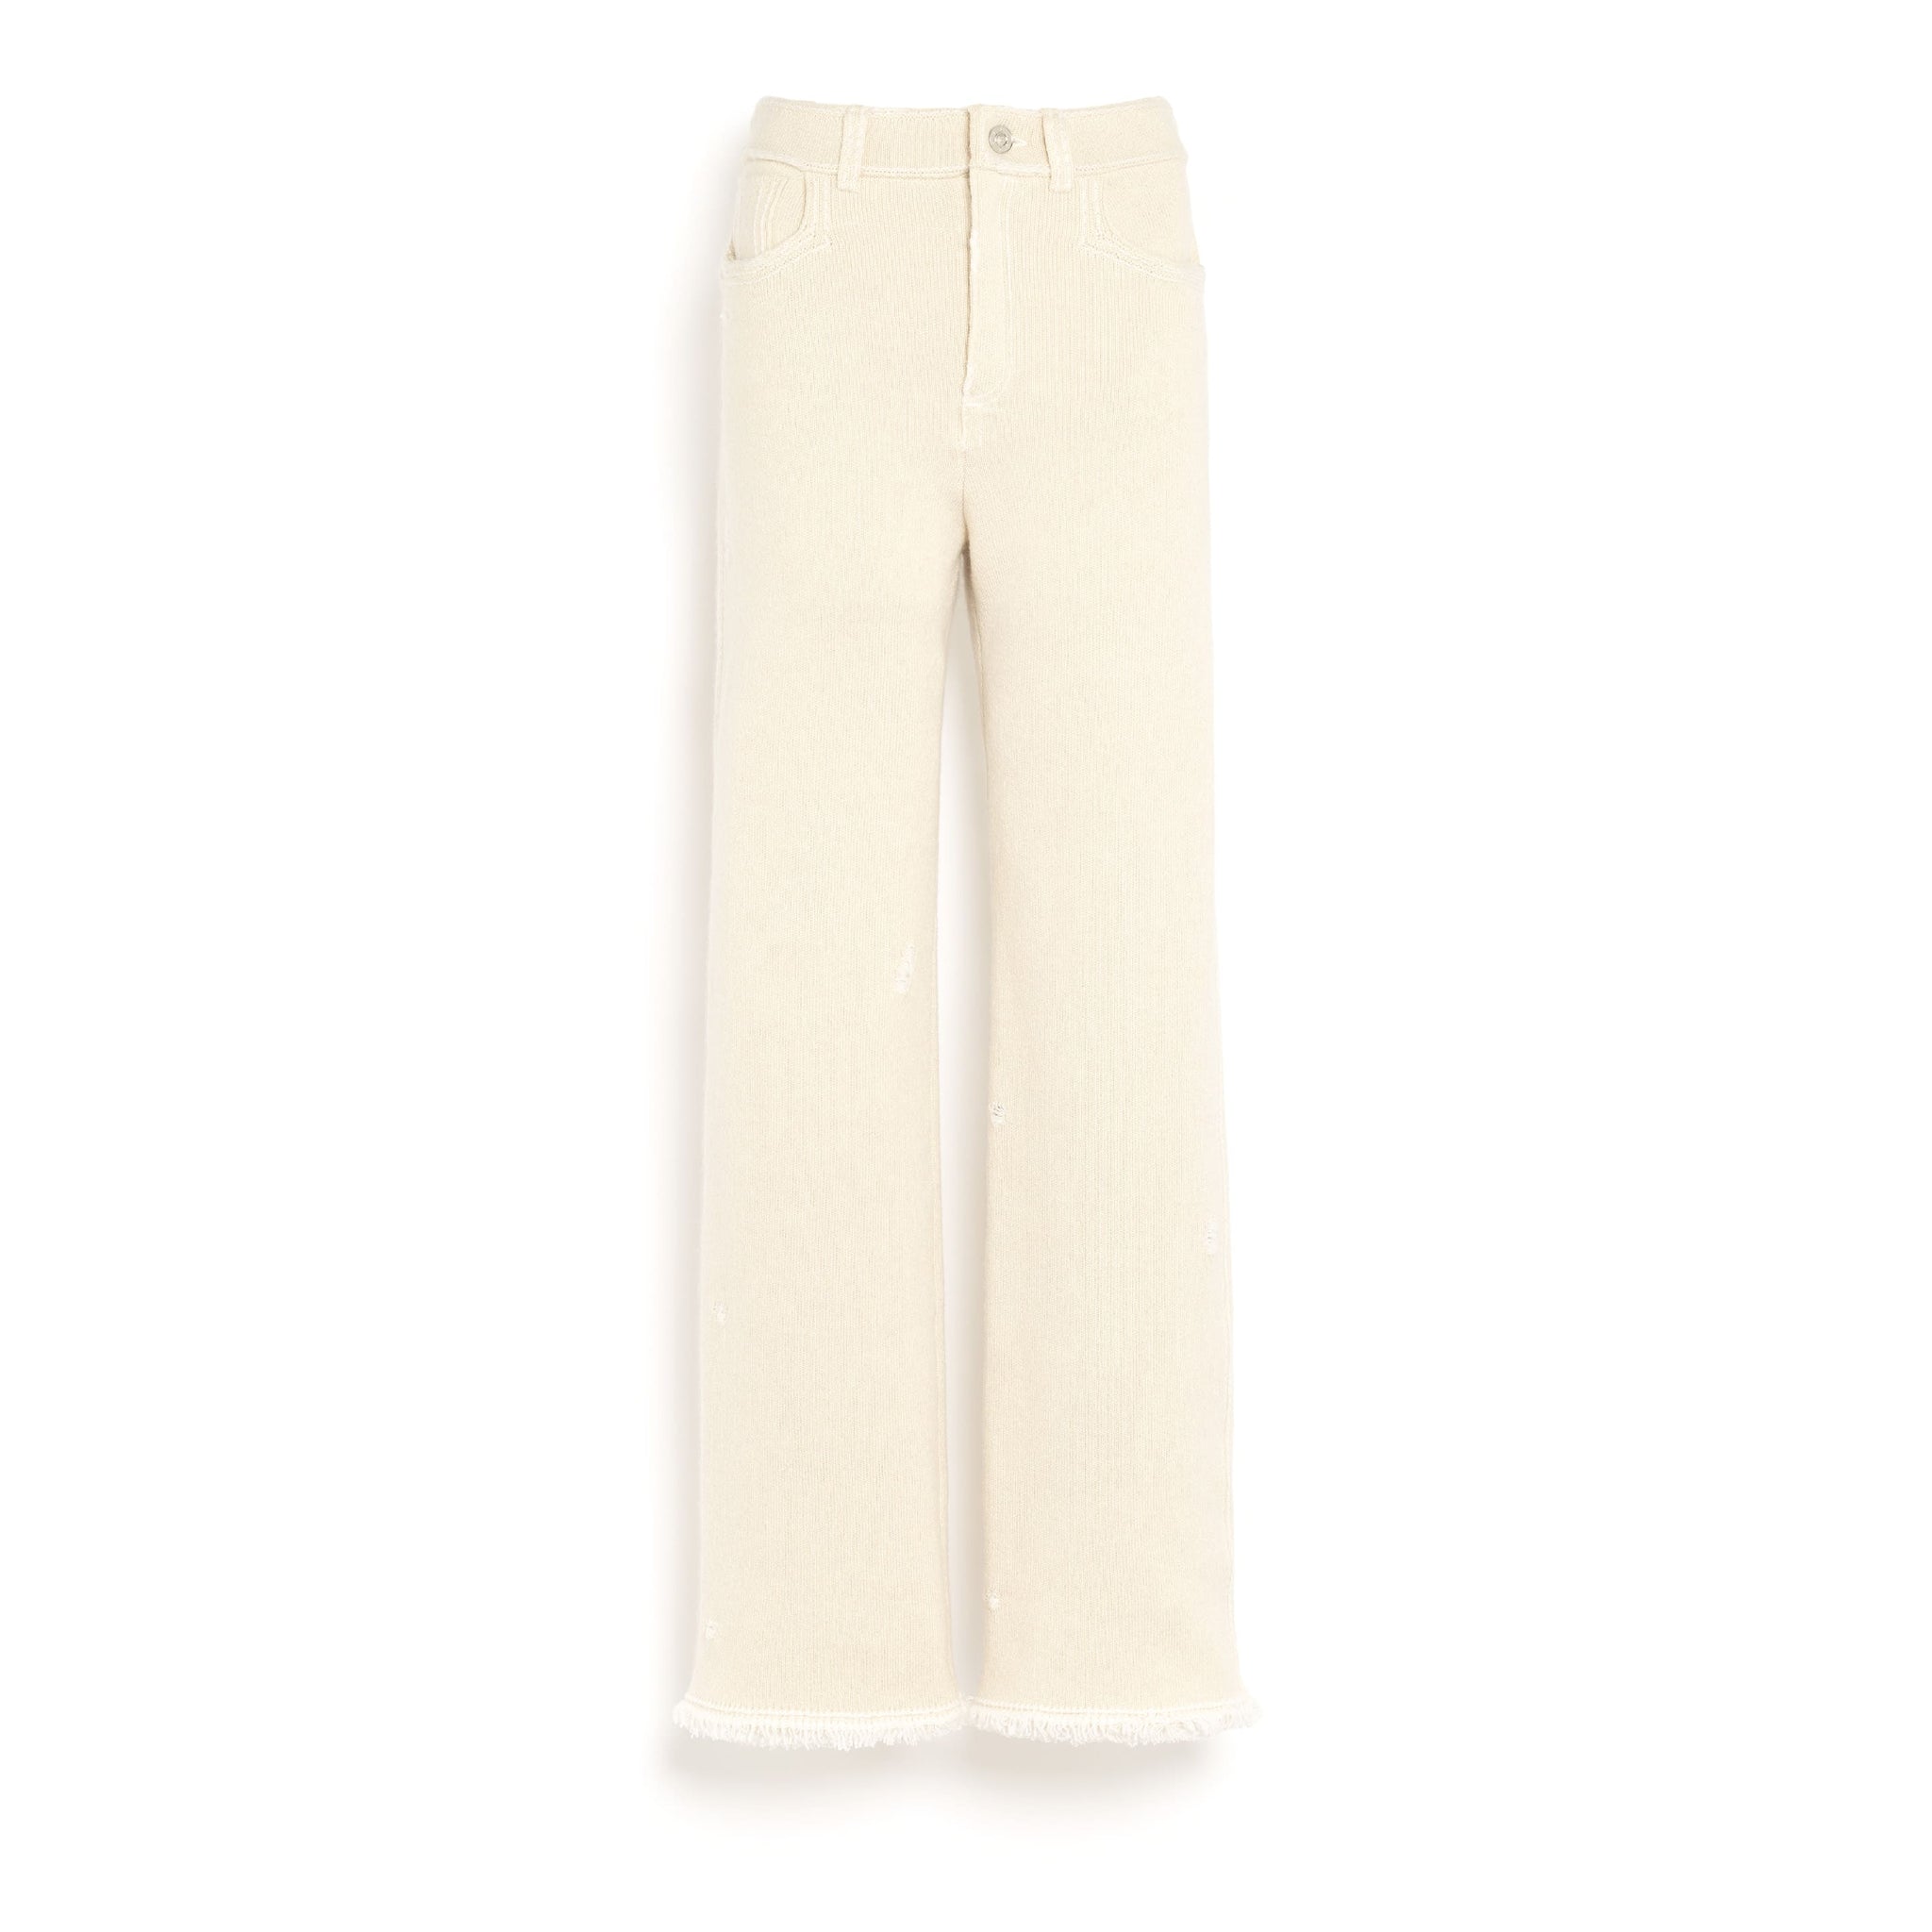 Cashmere sweatpants in beige - Barrie